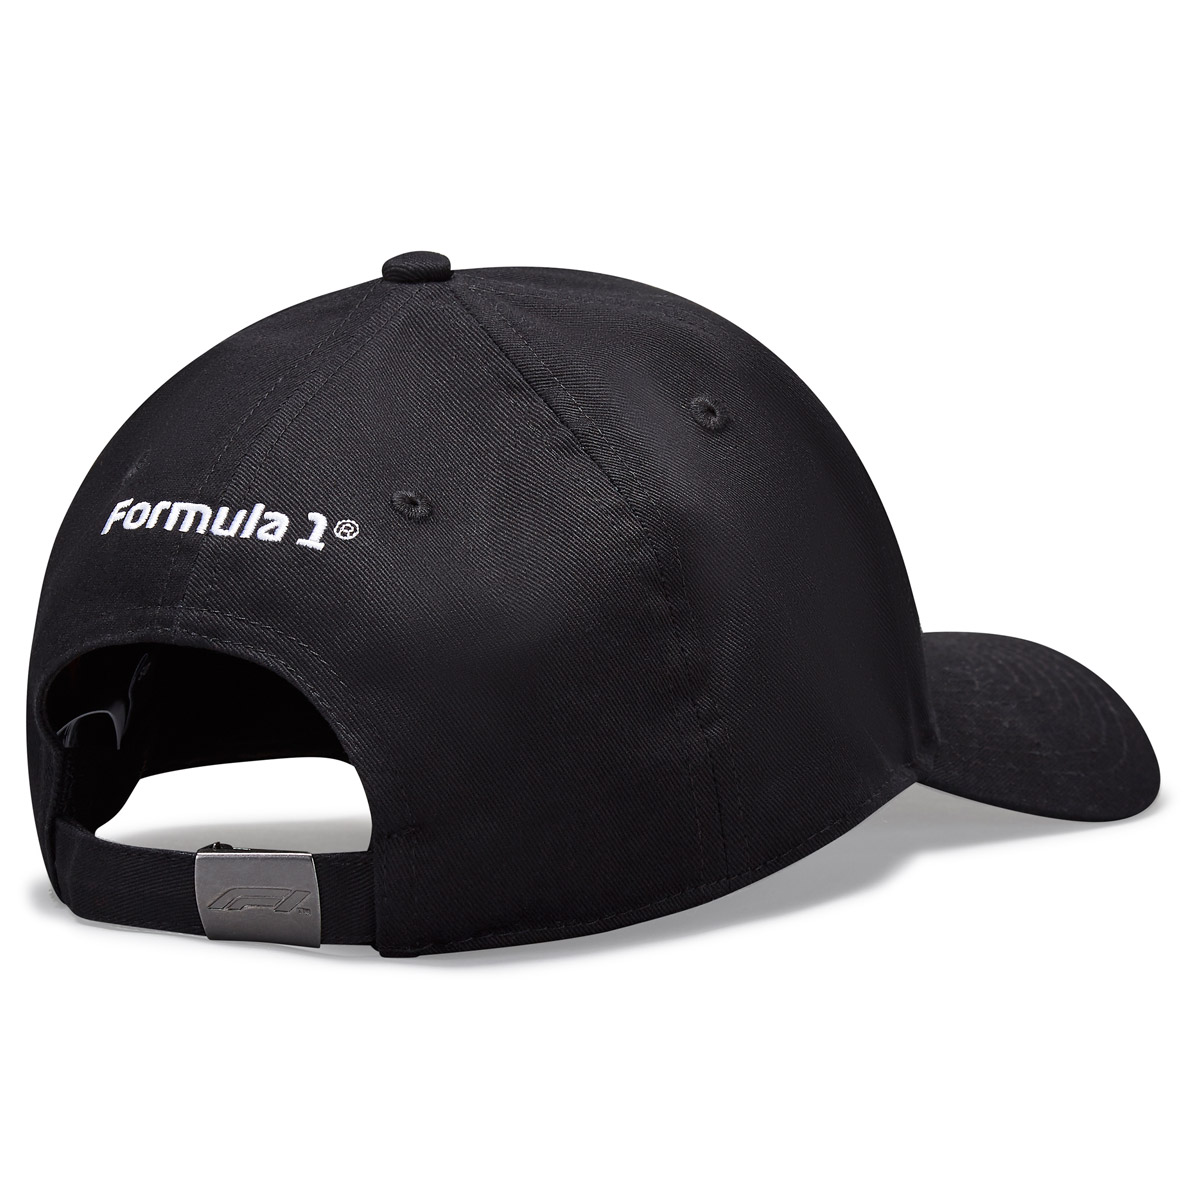 F1 collection cap "Logo" - black